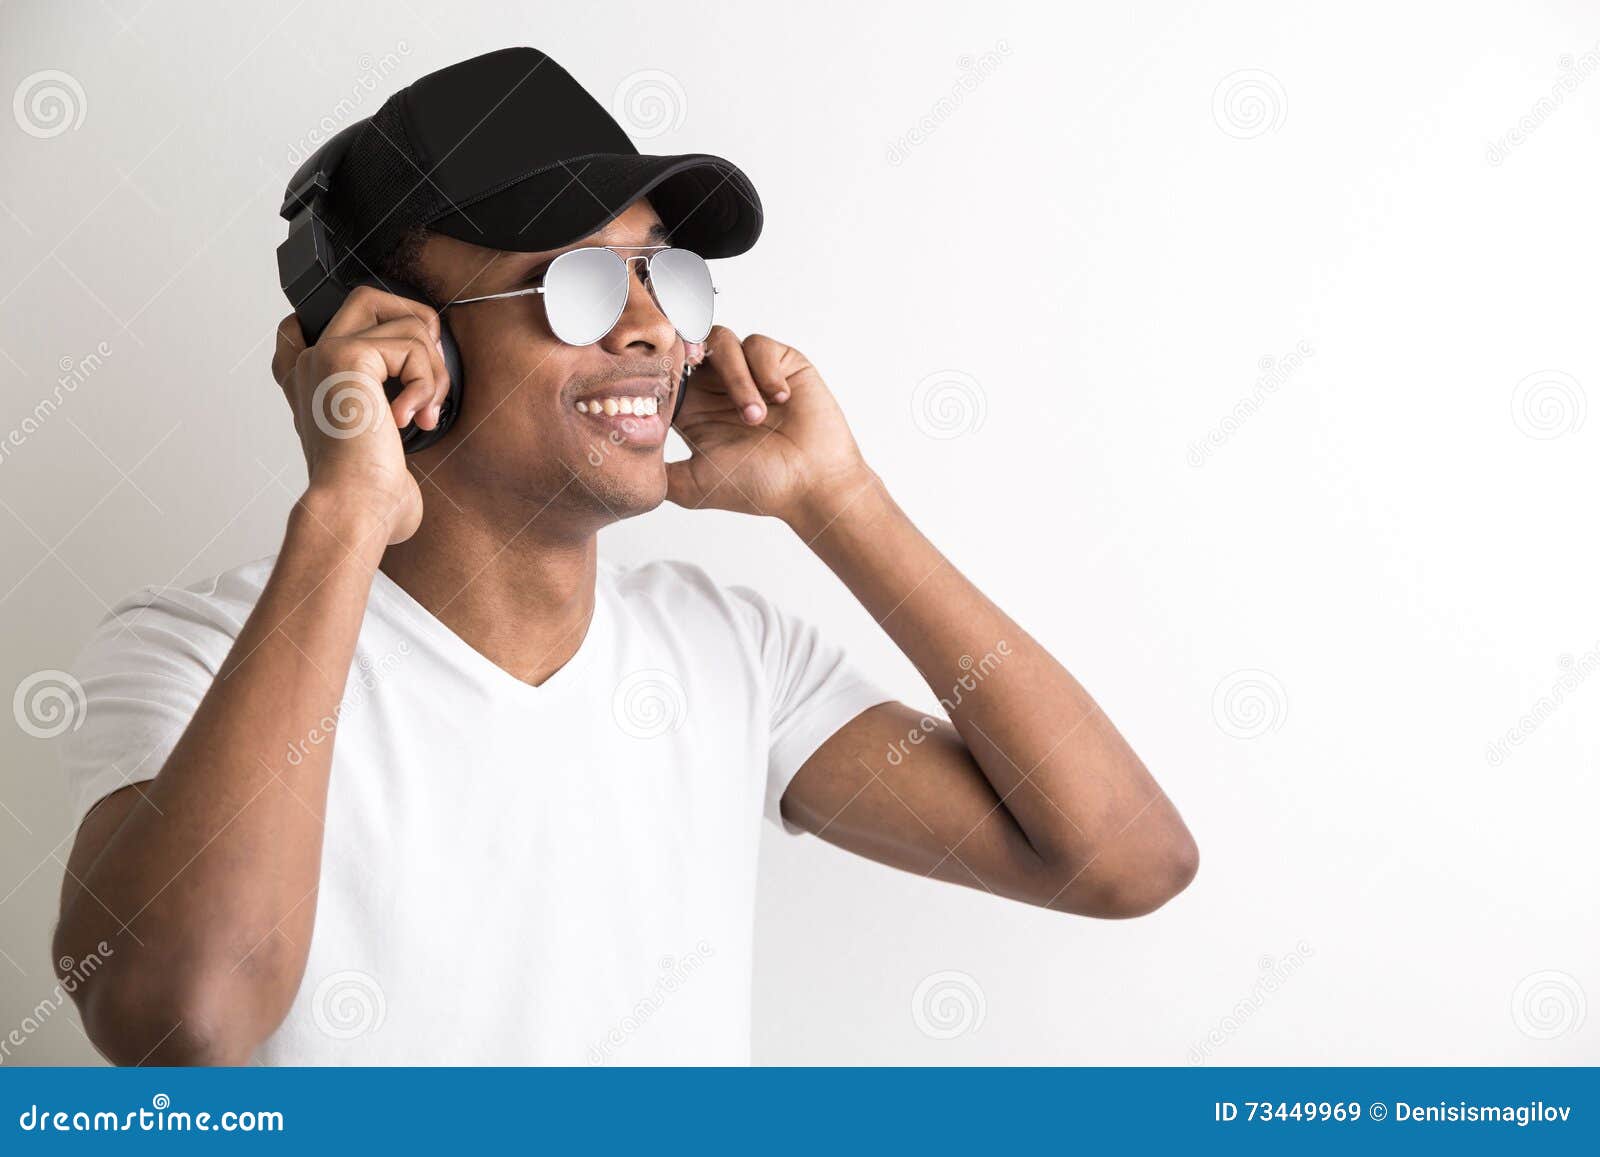 smiling-black-guy-headphones-portrait-african-american-cap-sunglasses-listening-to-music-light-background-73449969.jpg